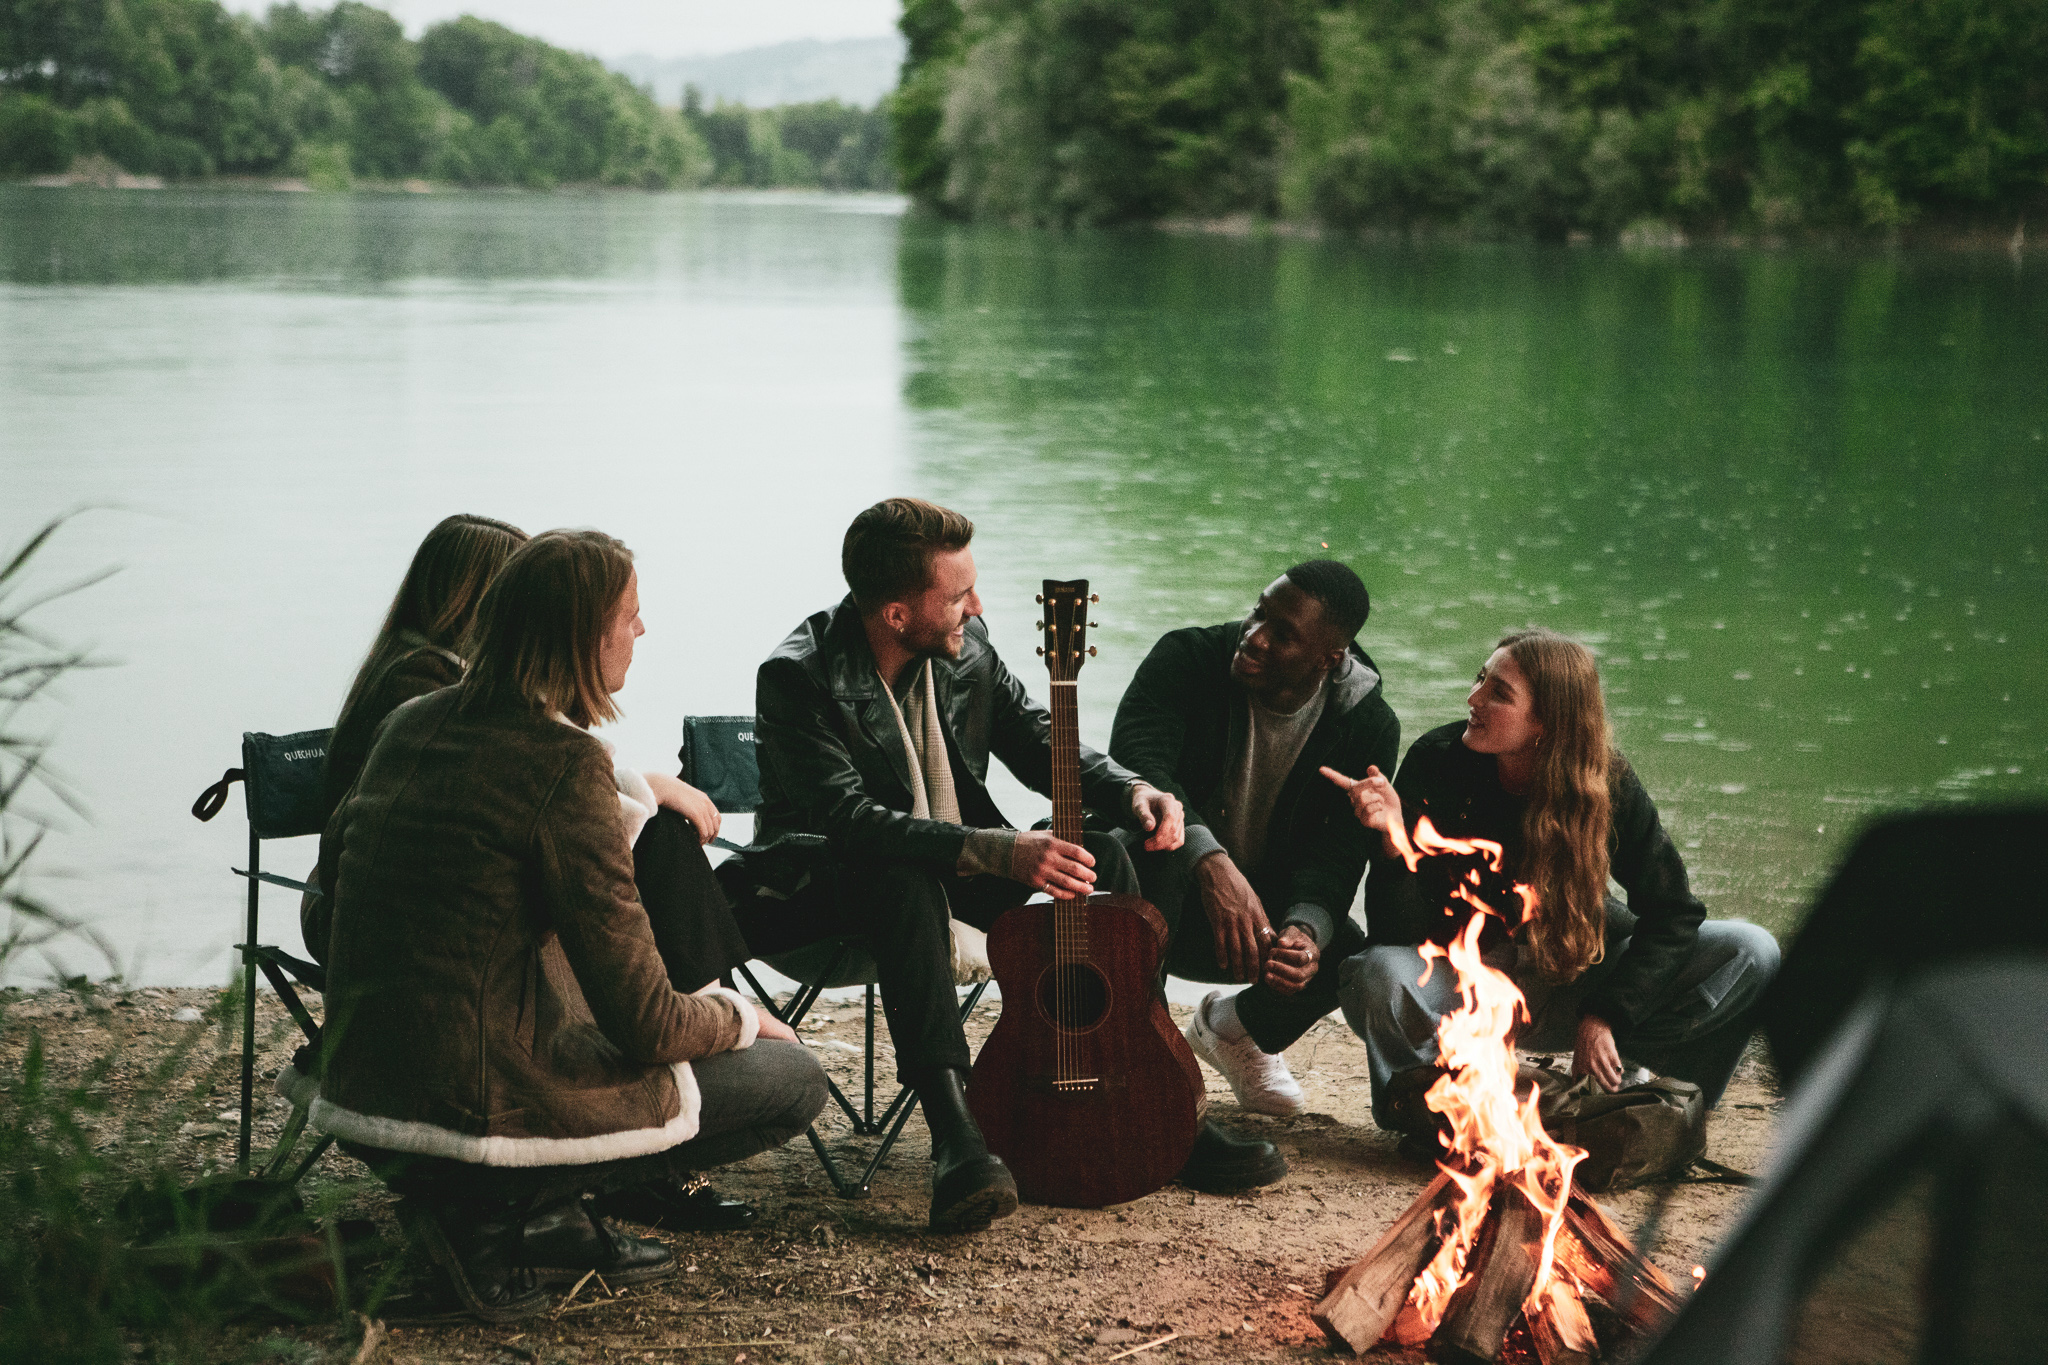 Group sitting by lake